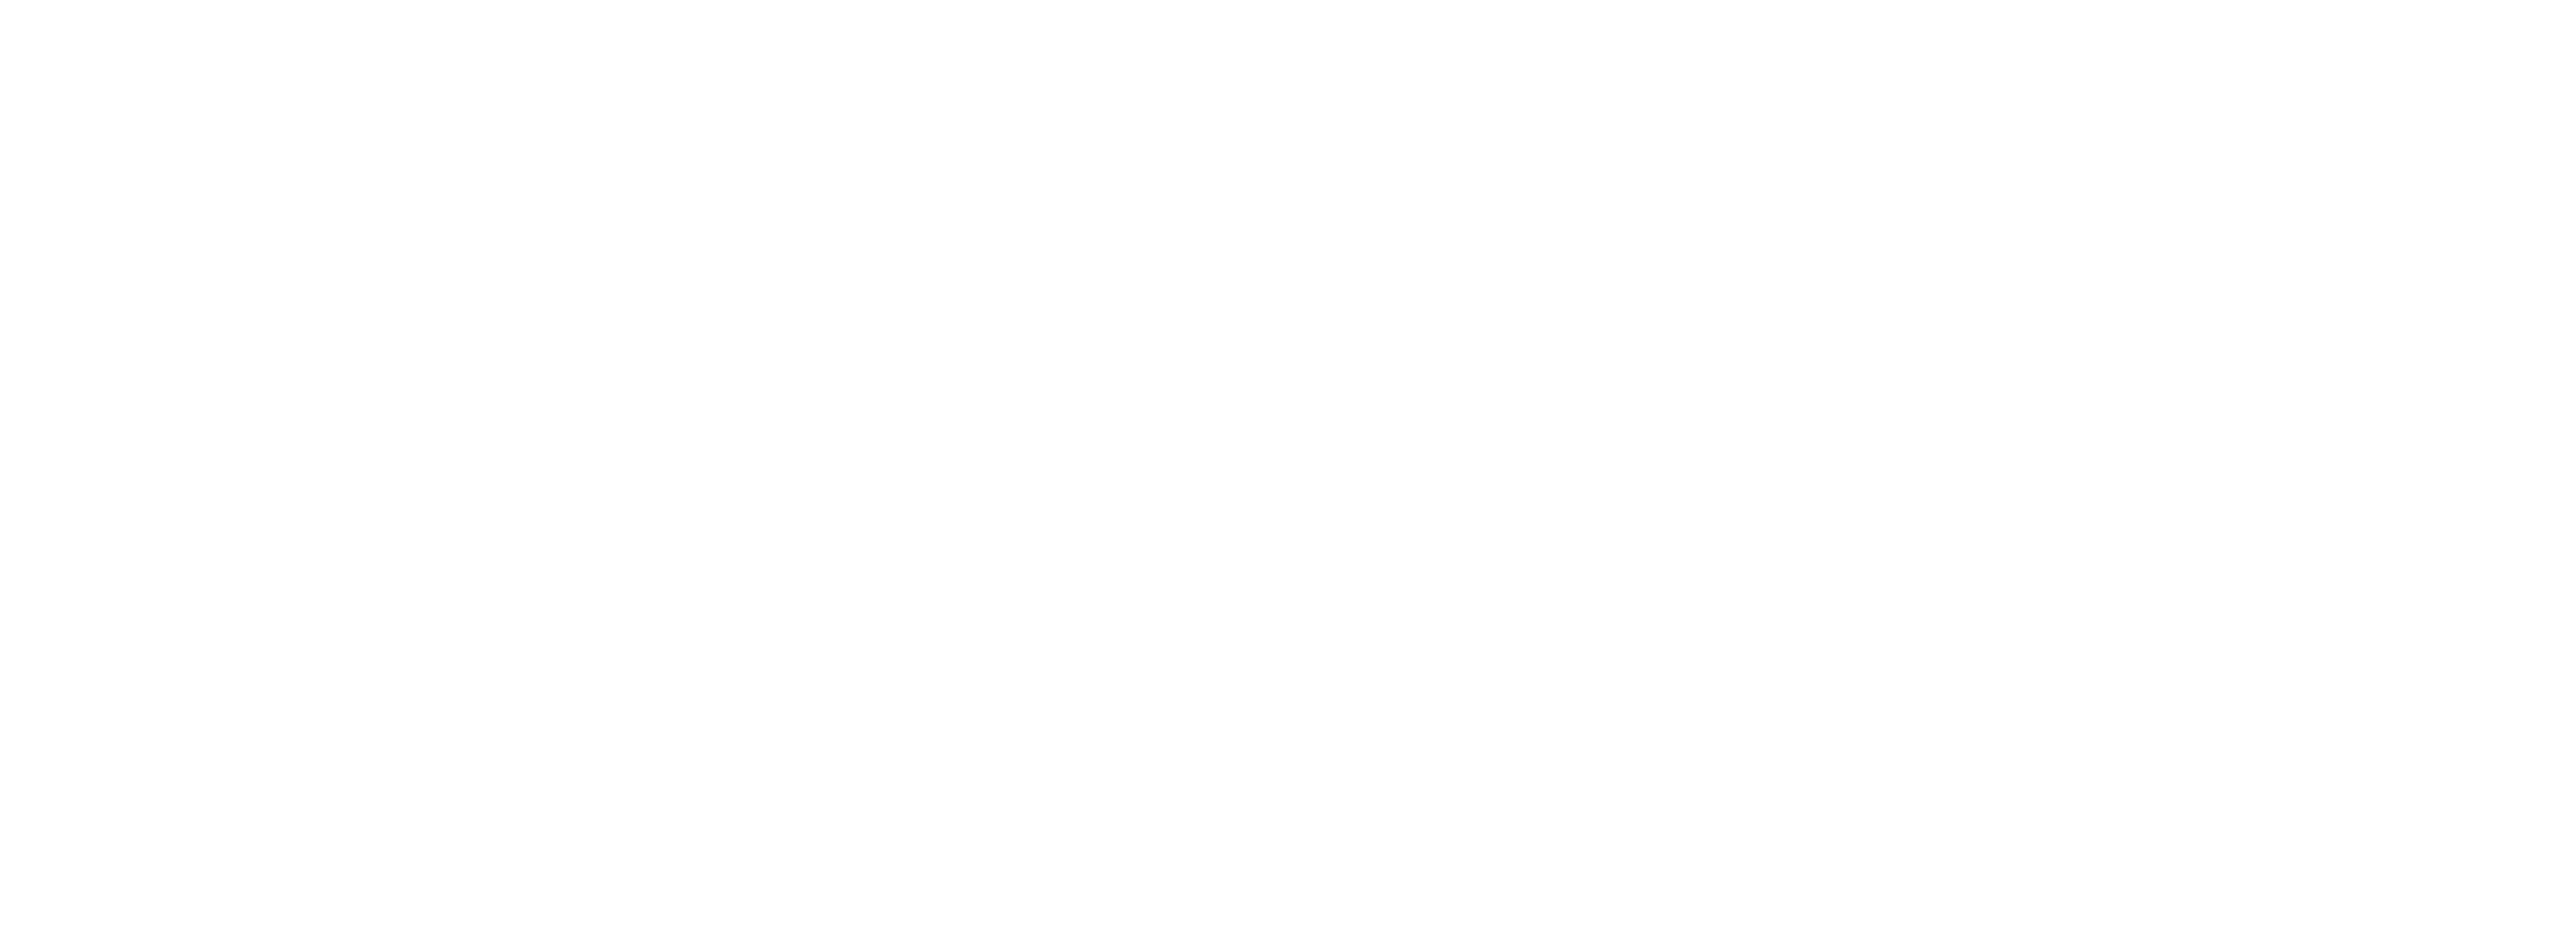 Cutlite Penta - Case history